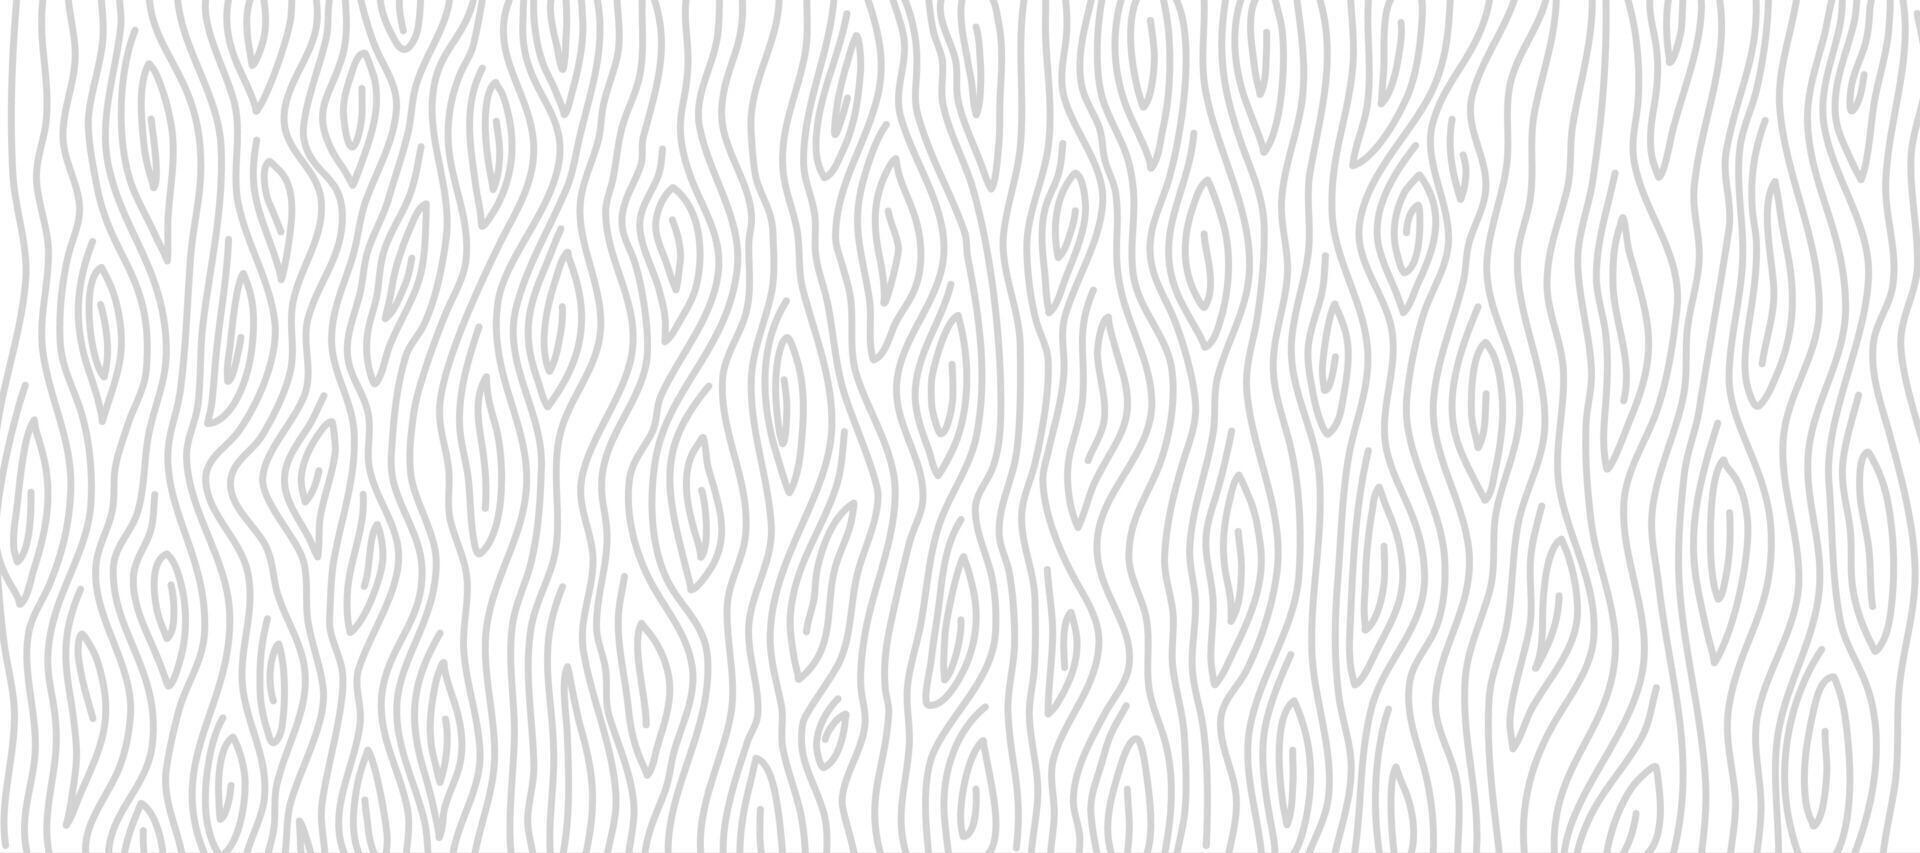 wood background. wood pattern. wavy wood background. Abstract wood line background. Wood outline background. vector